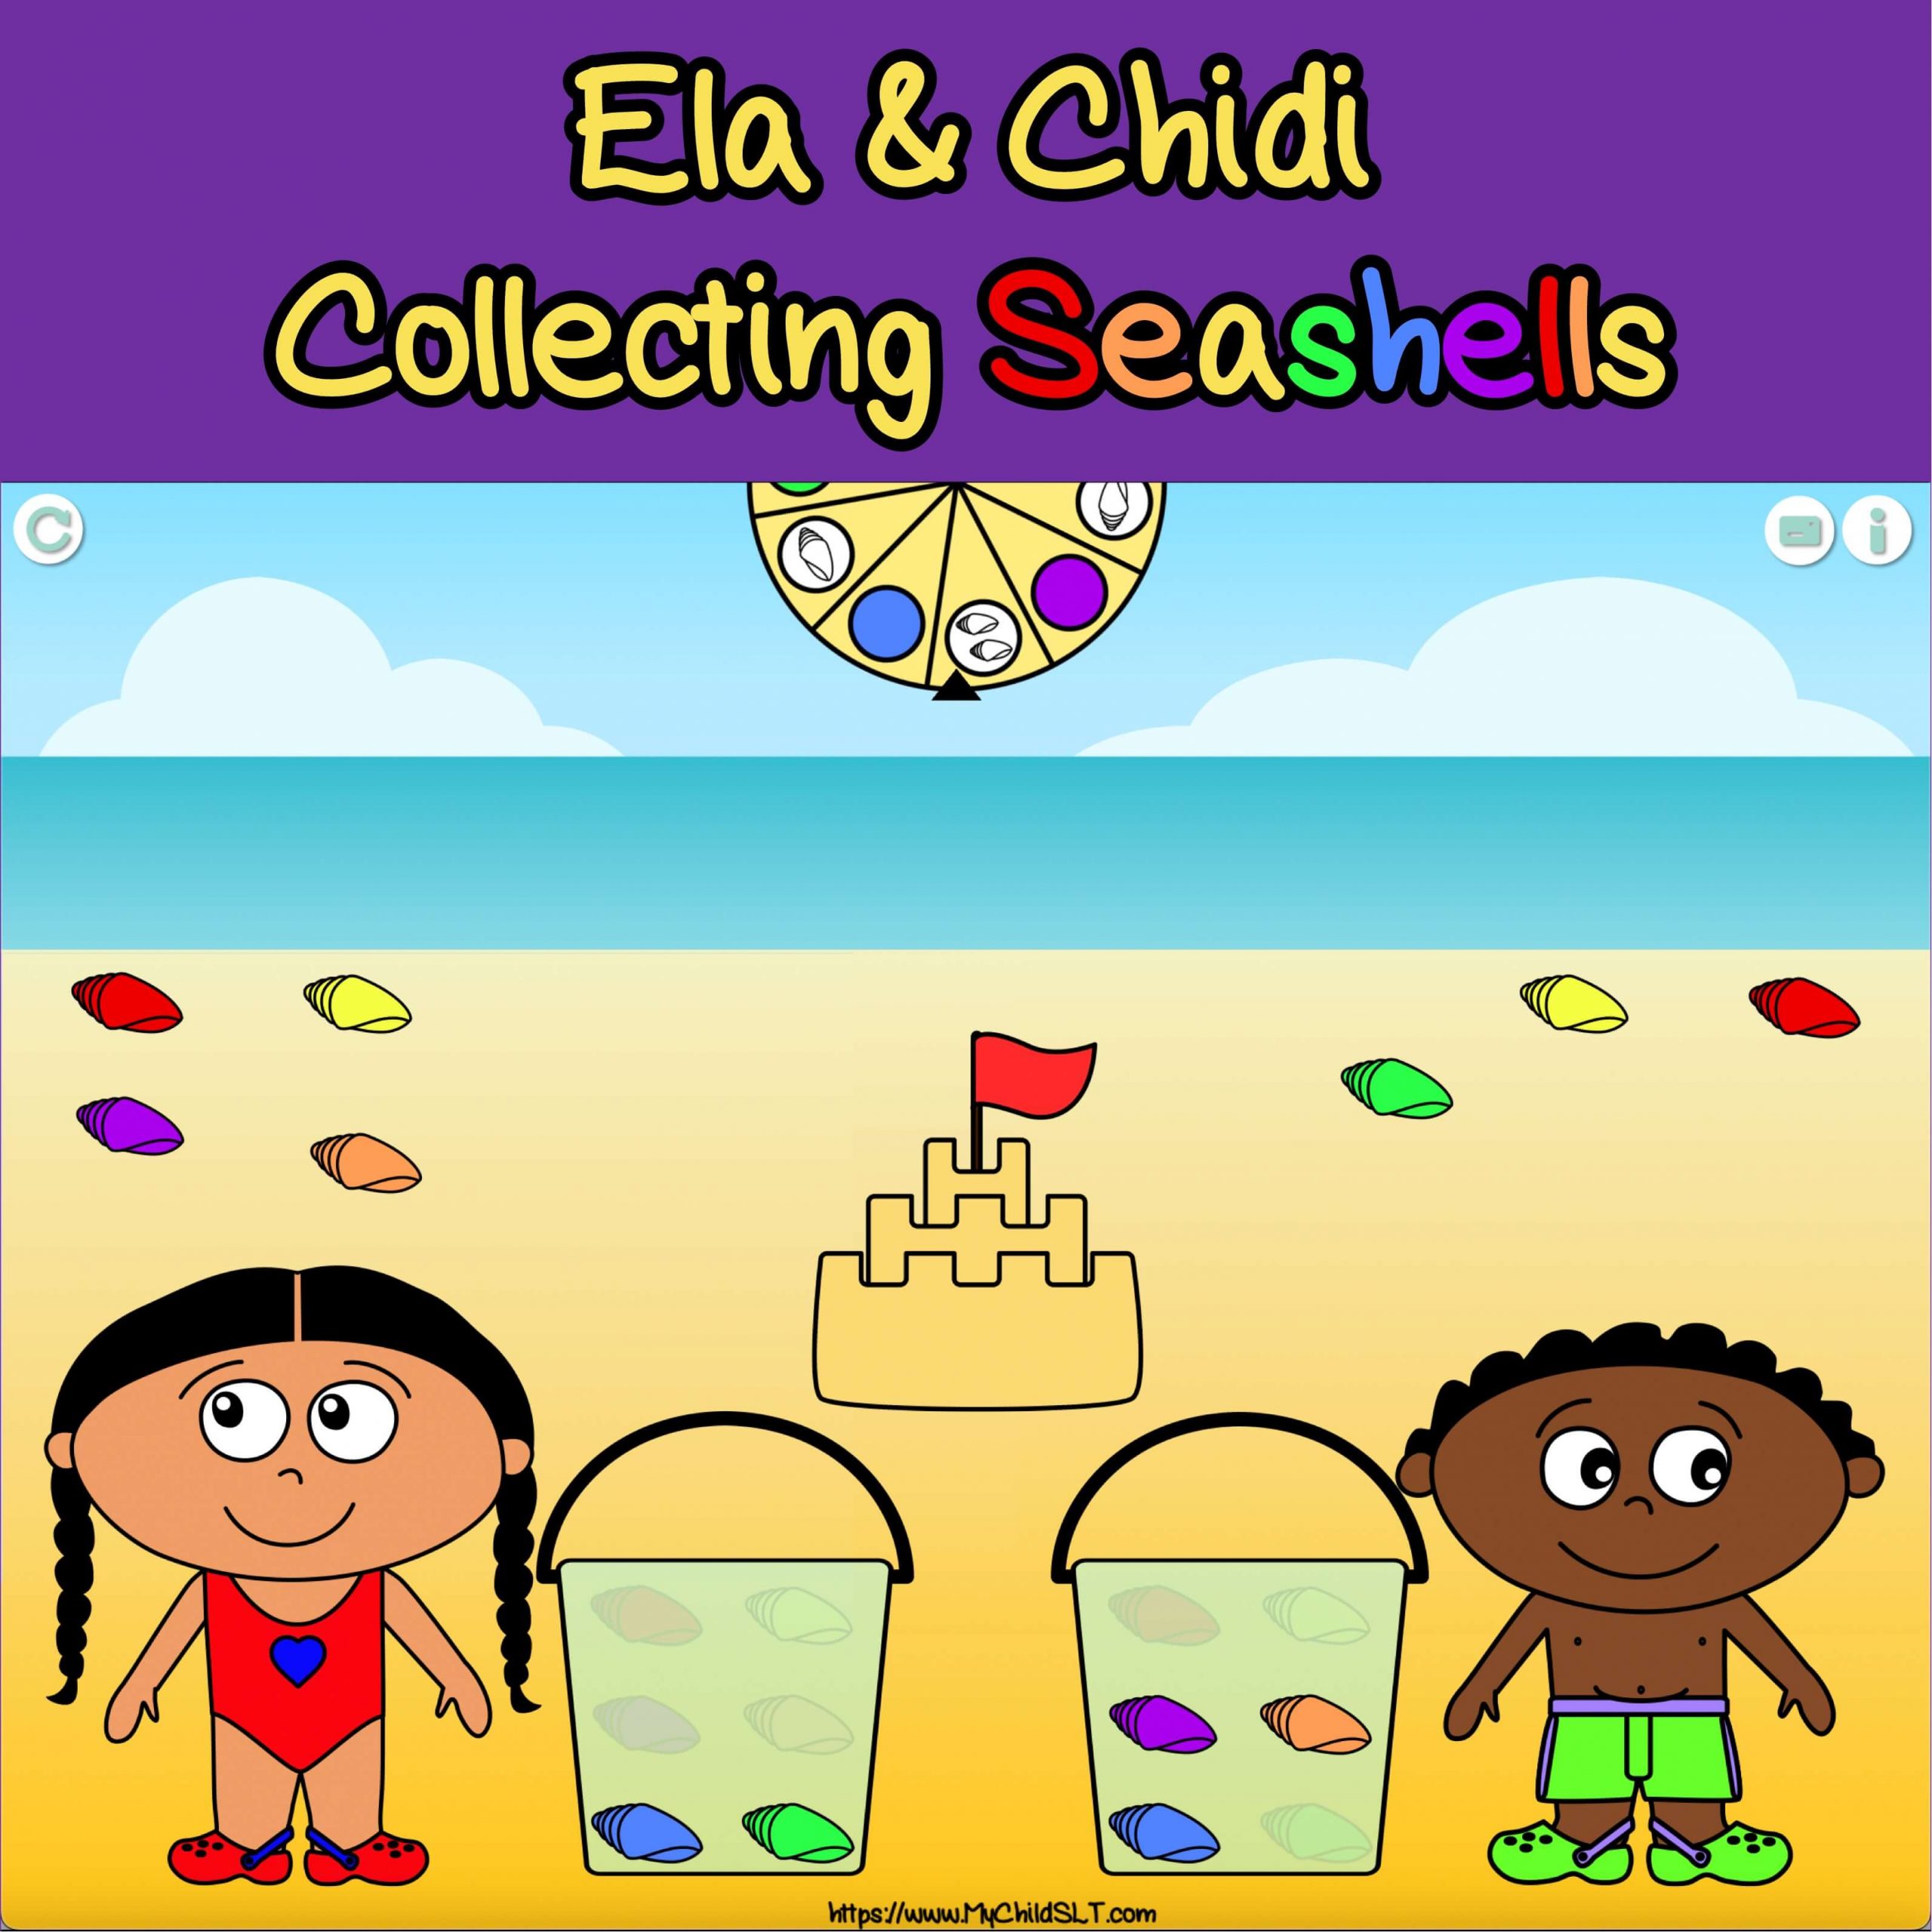 Ela & Chidi – Collecting Seashells